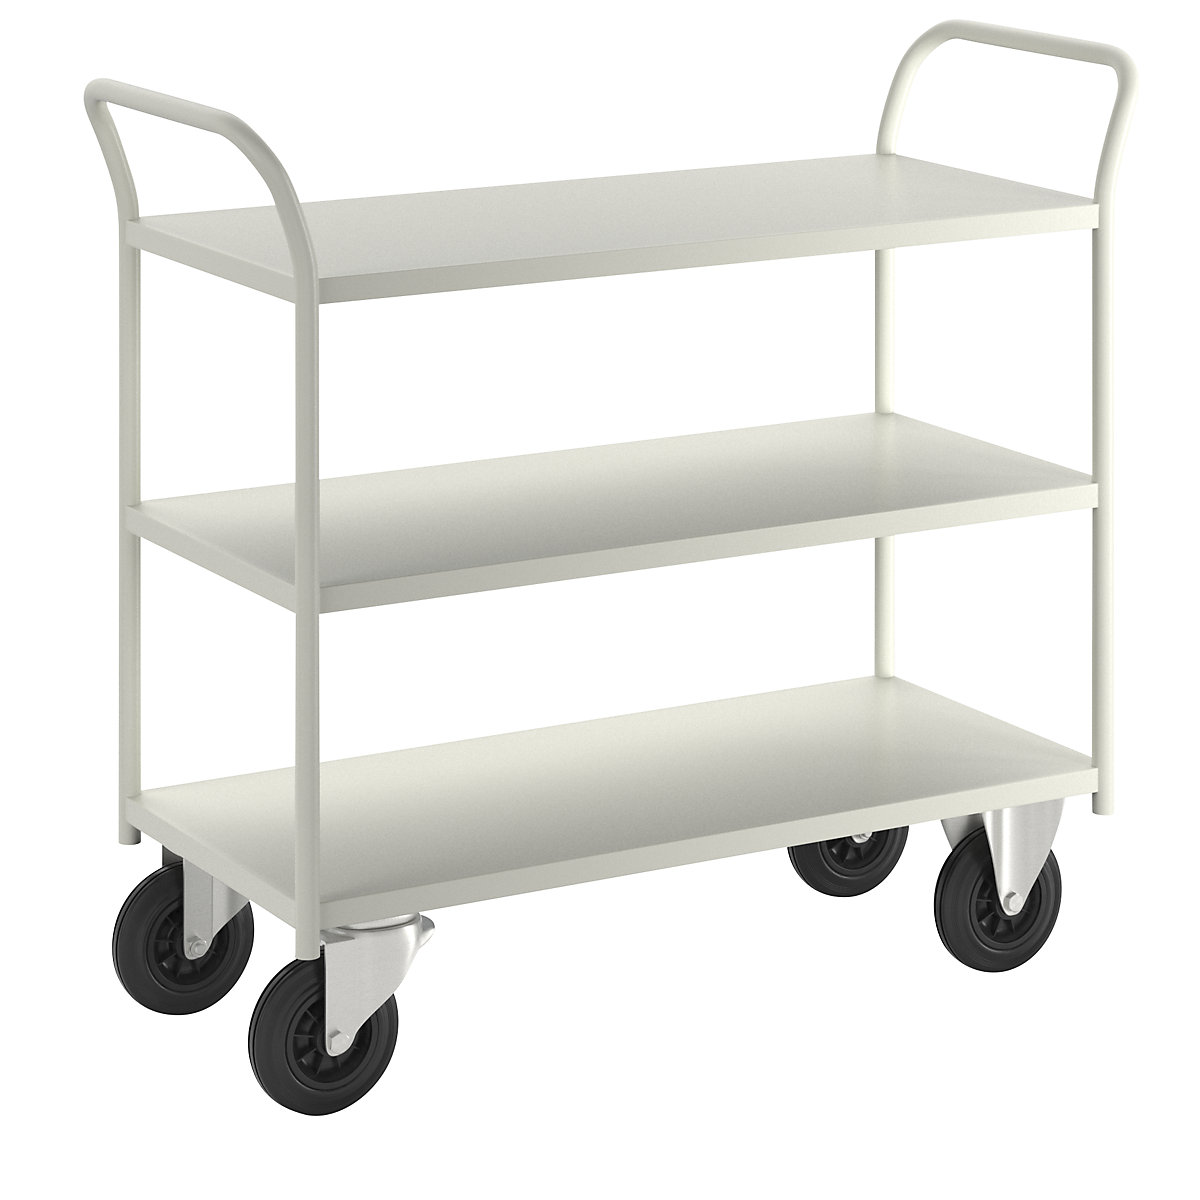 KM41 table trolley – Kongamek, 3 shelves, LxWxH 1080 x 450 x 975 mm, white, 2 swivel castors and 2 fixed castors-6